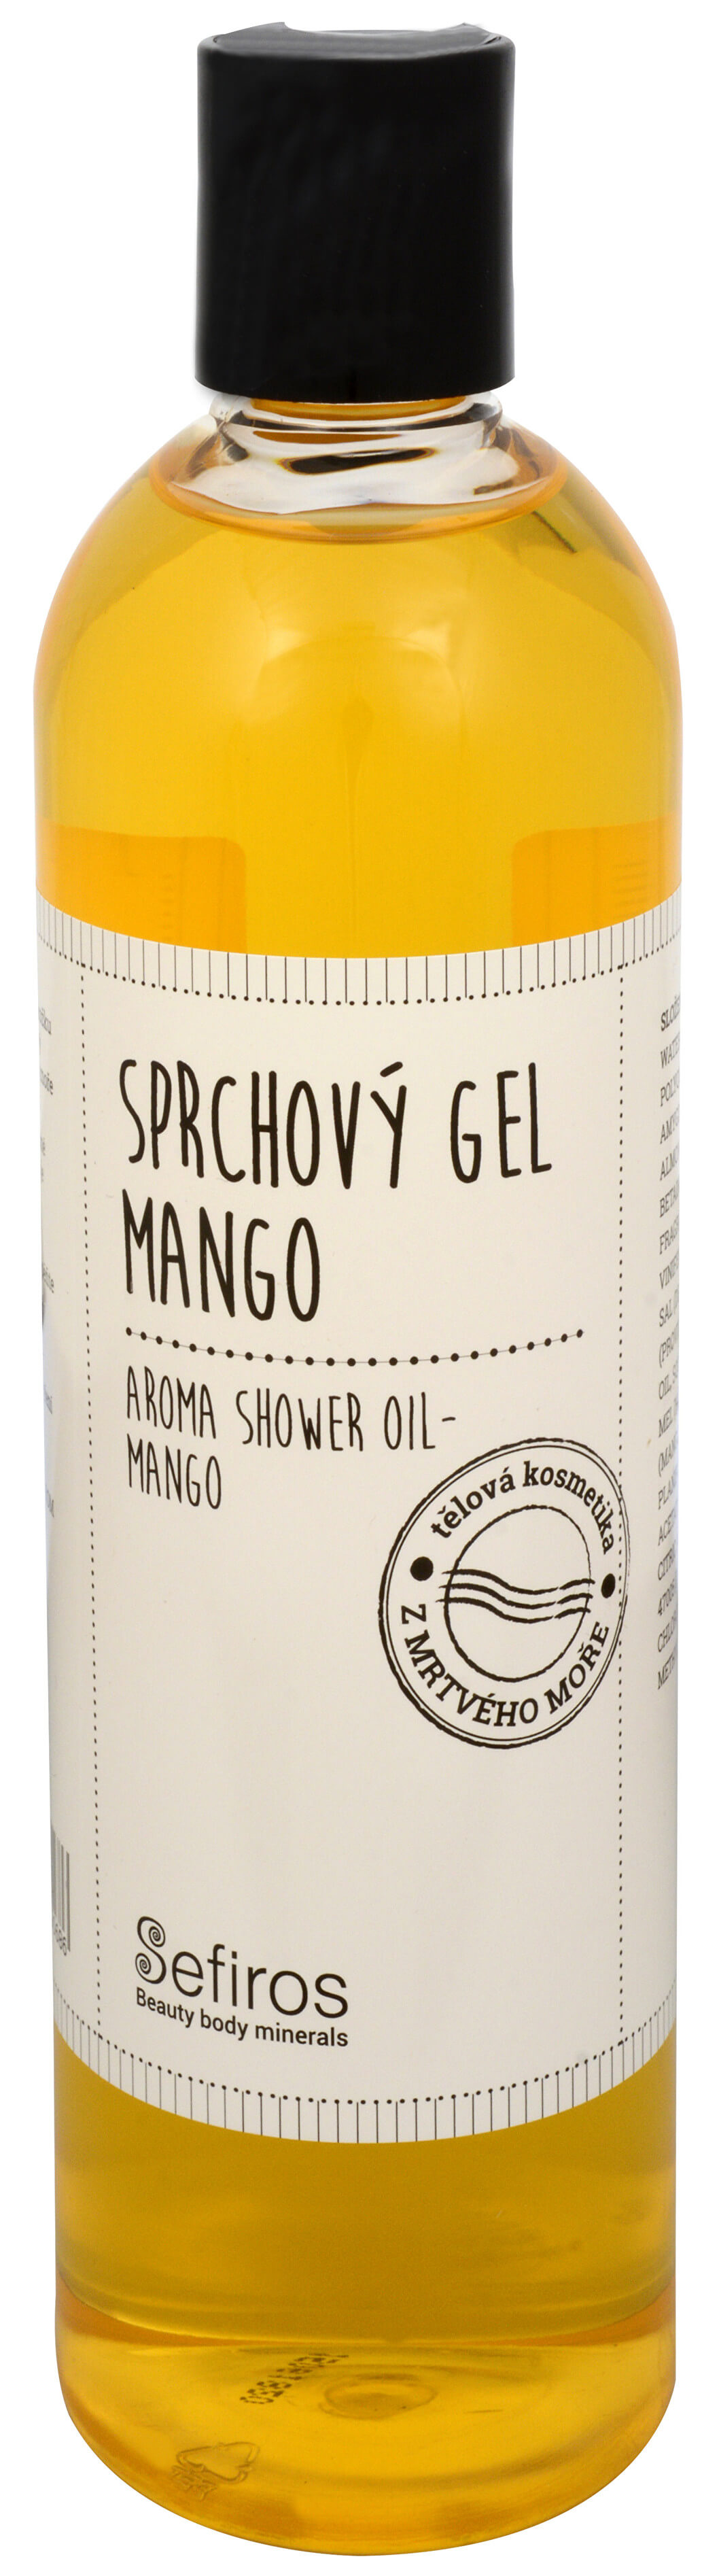 Sefiross Sprchový gel Mango (Aroma Shower Oil) 400 ml